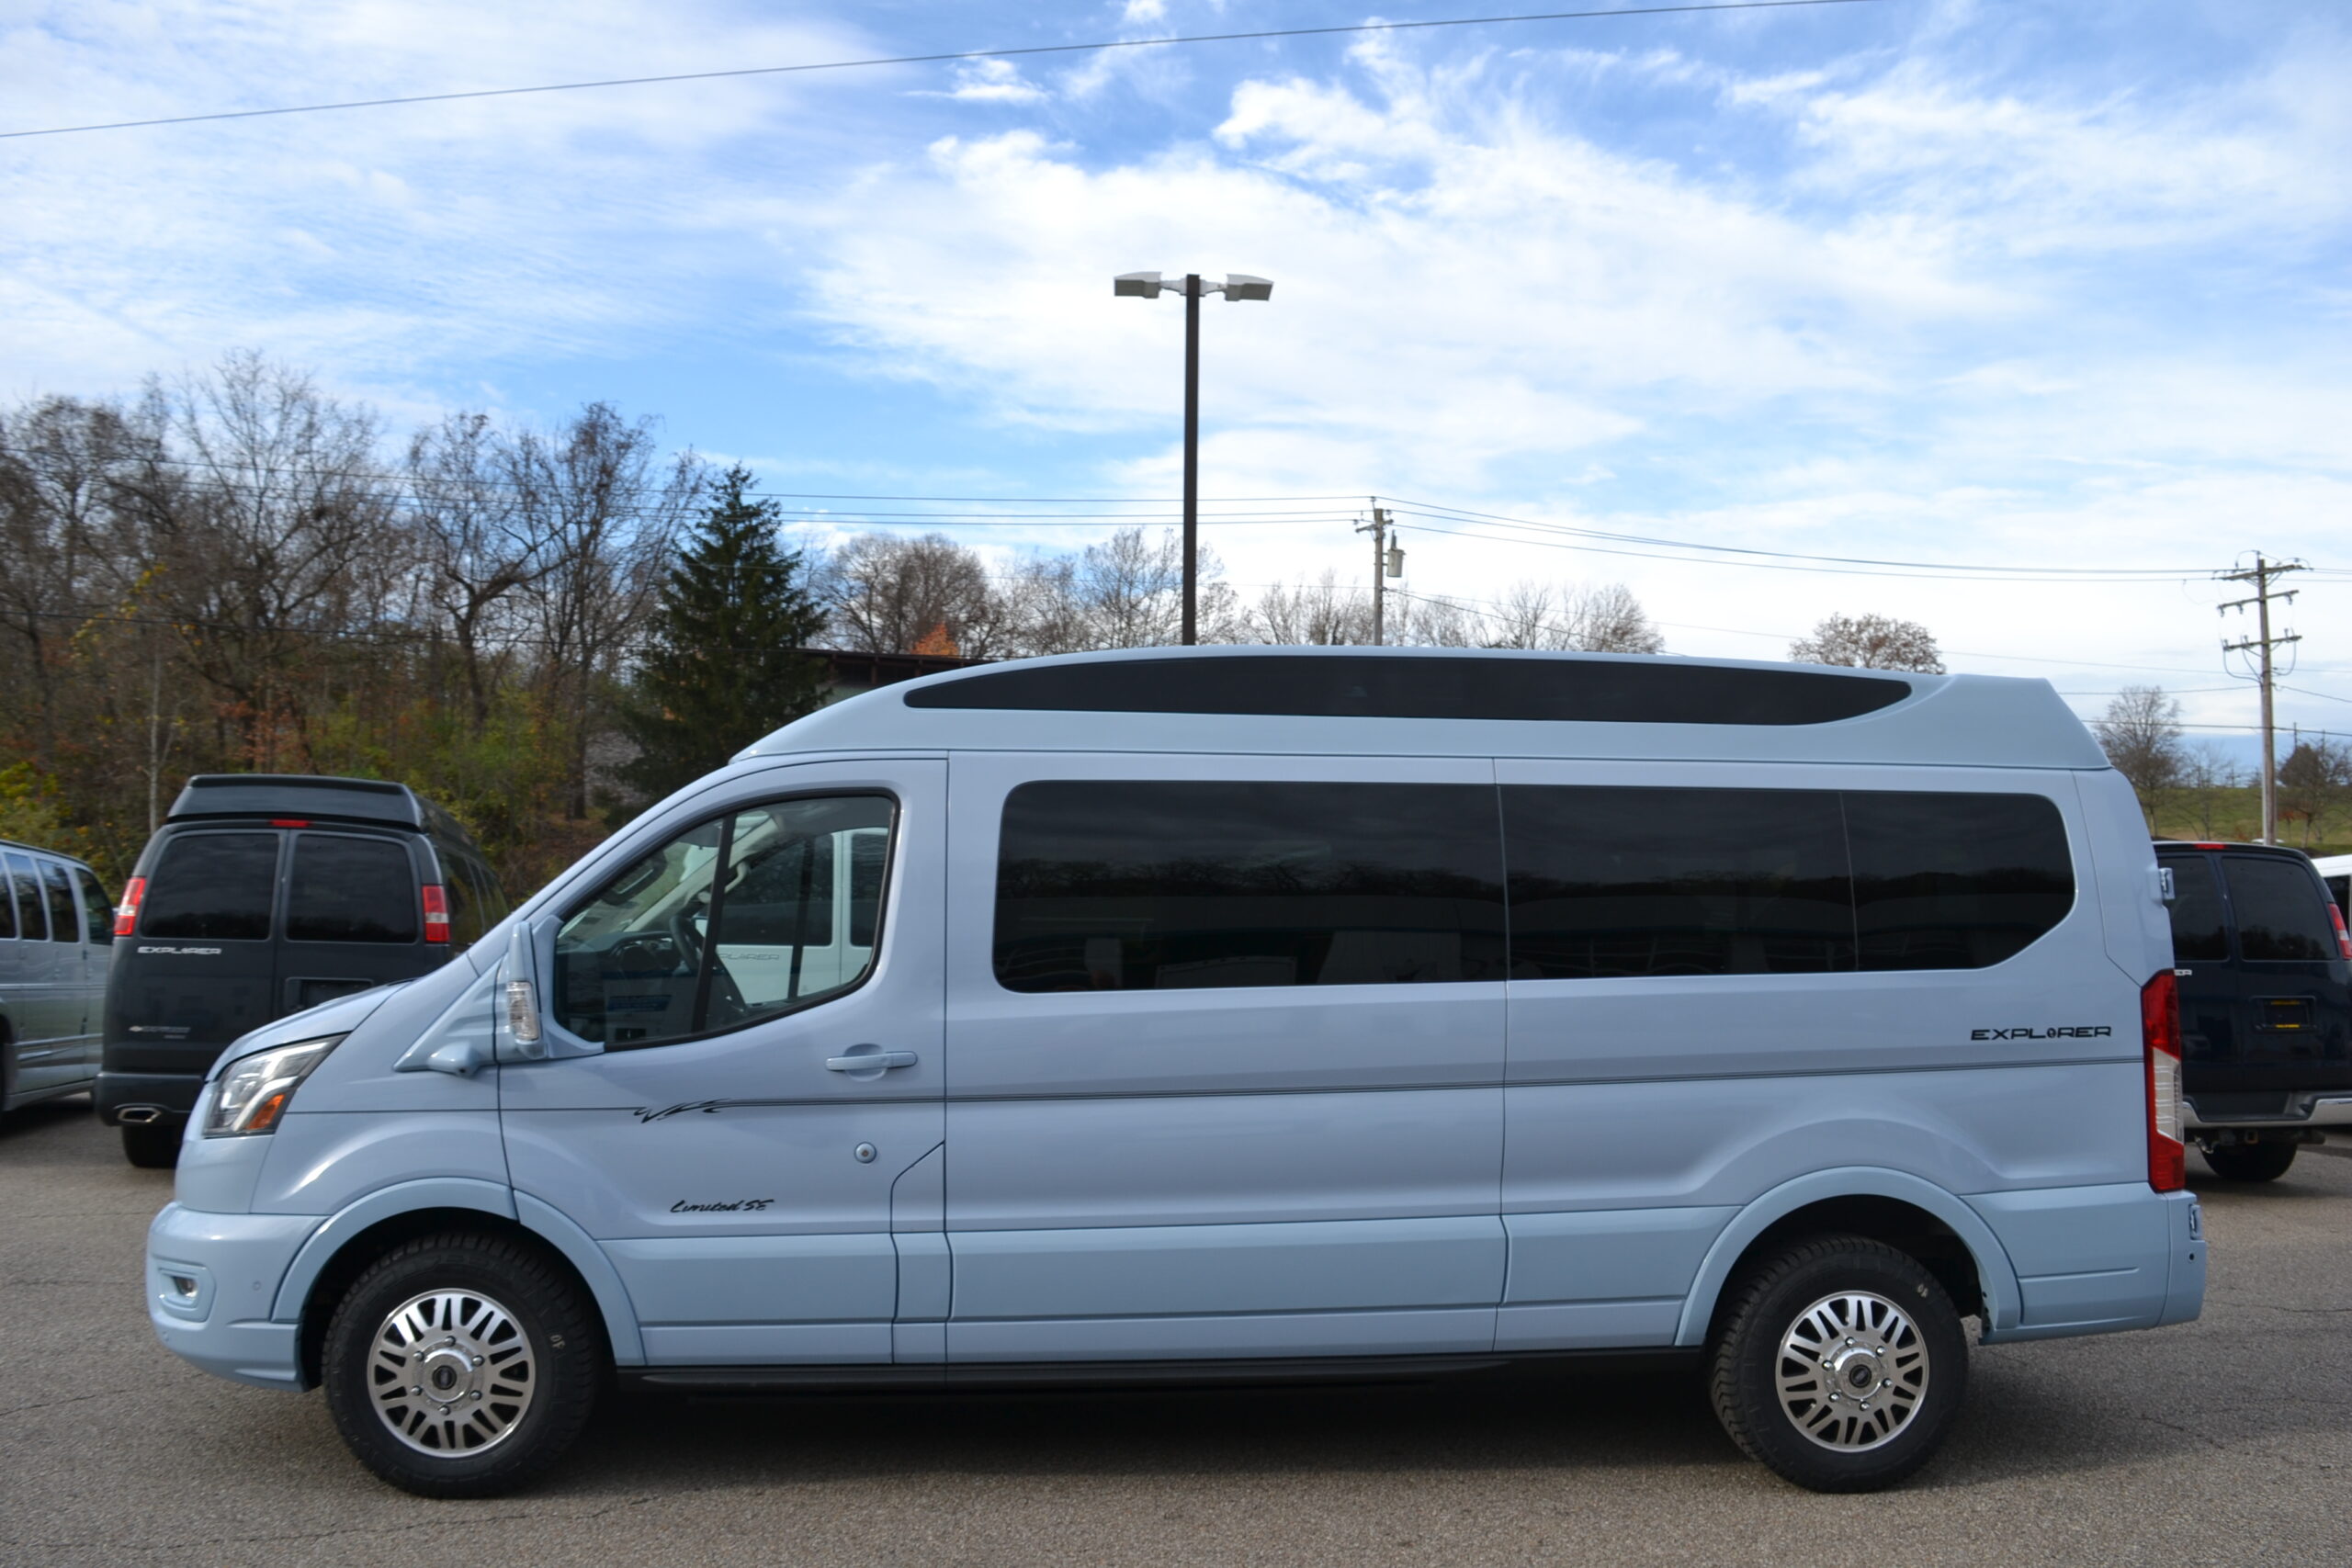 Conversion Van Owners Manual - Explorer Van Conversions